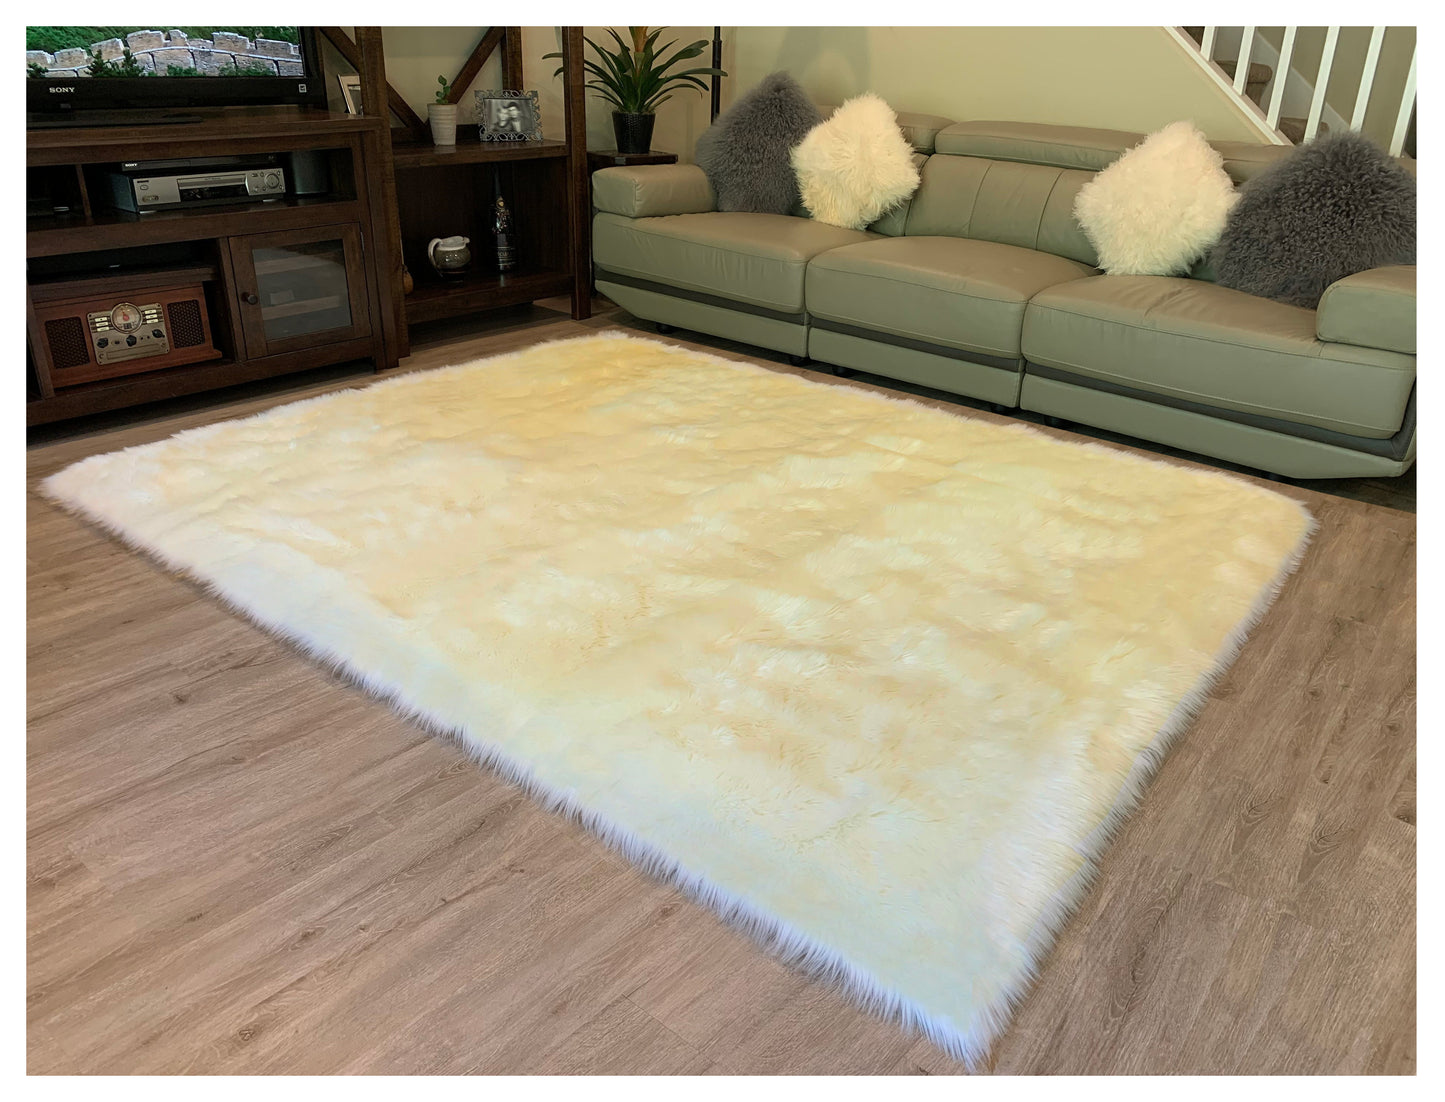 Faux sheepskin rug Rectangle Shaped 4'X6' (120cm x 180cm)